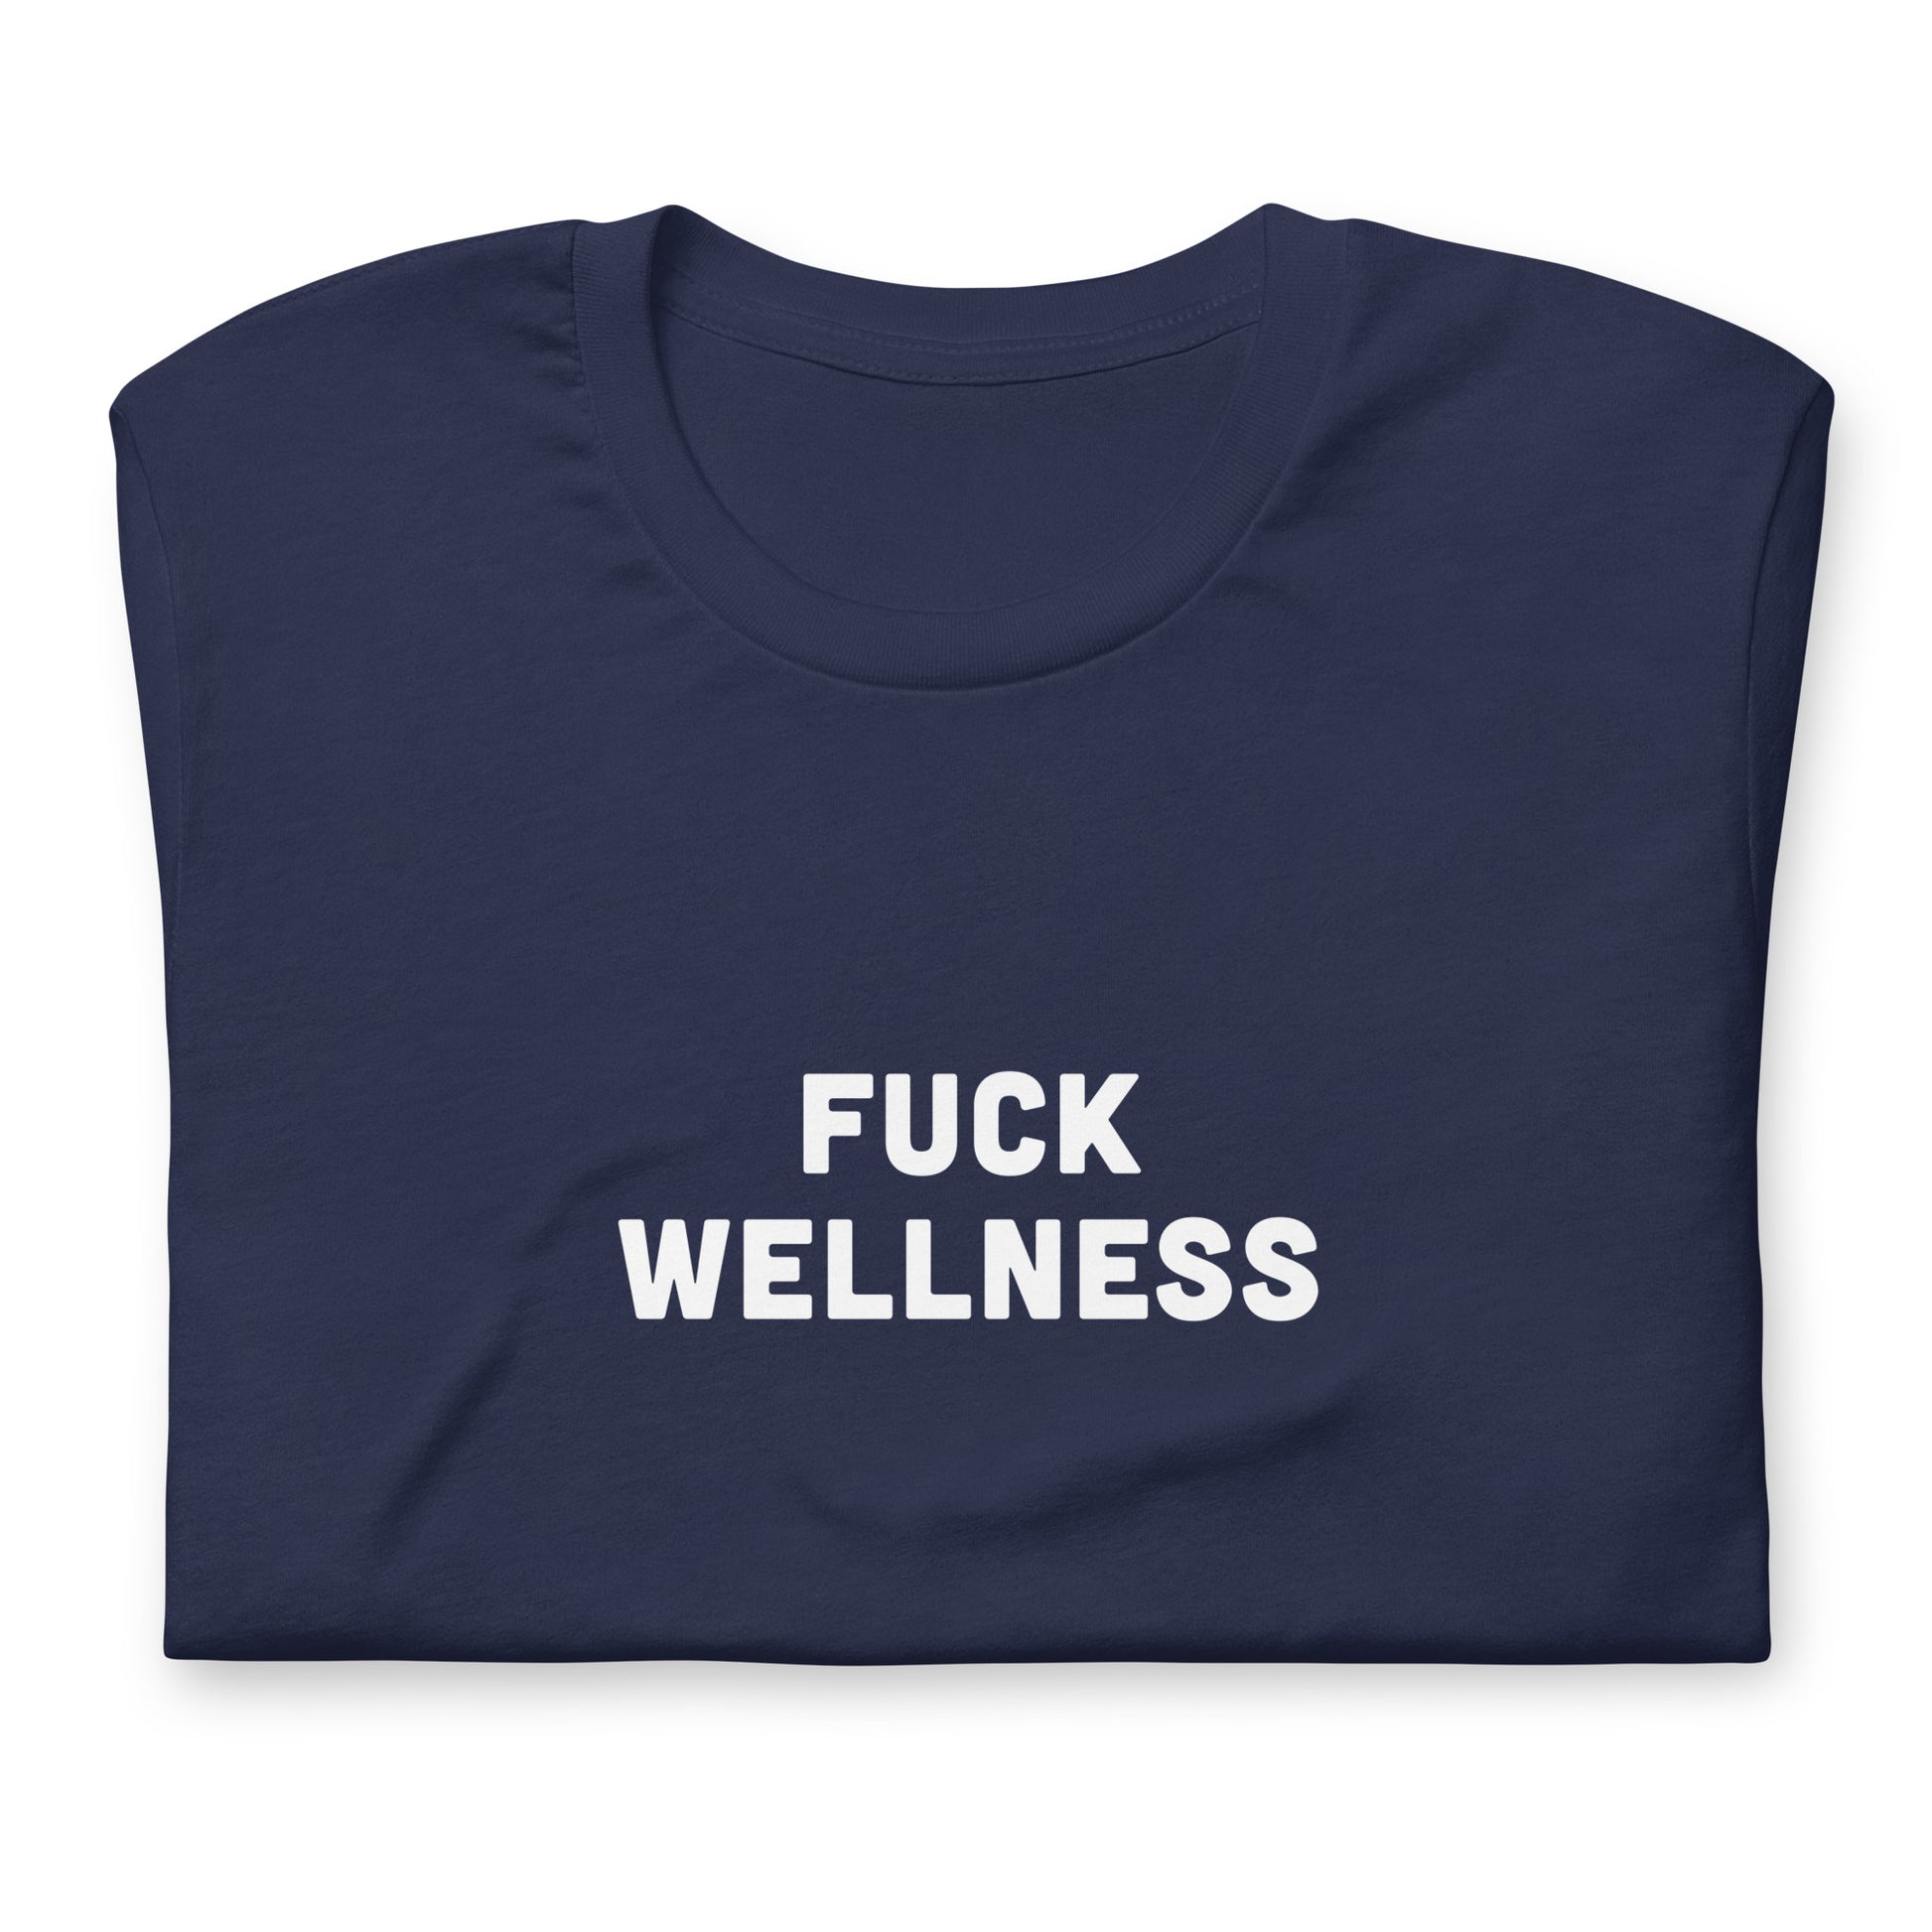 Fuck Wellness T-Shirt Size L Color Black